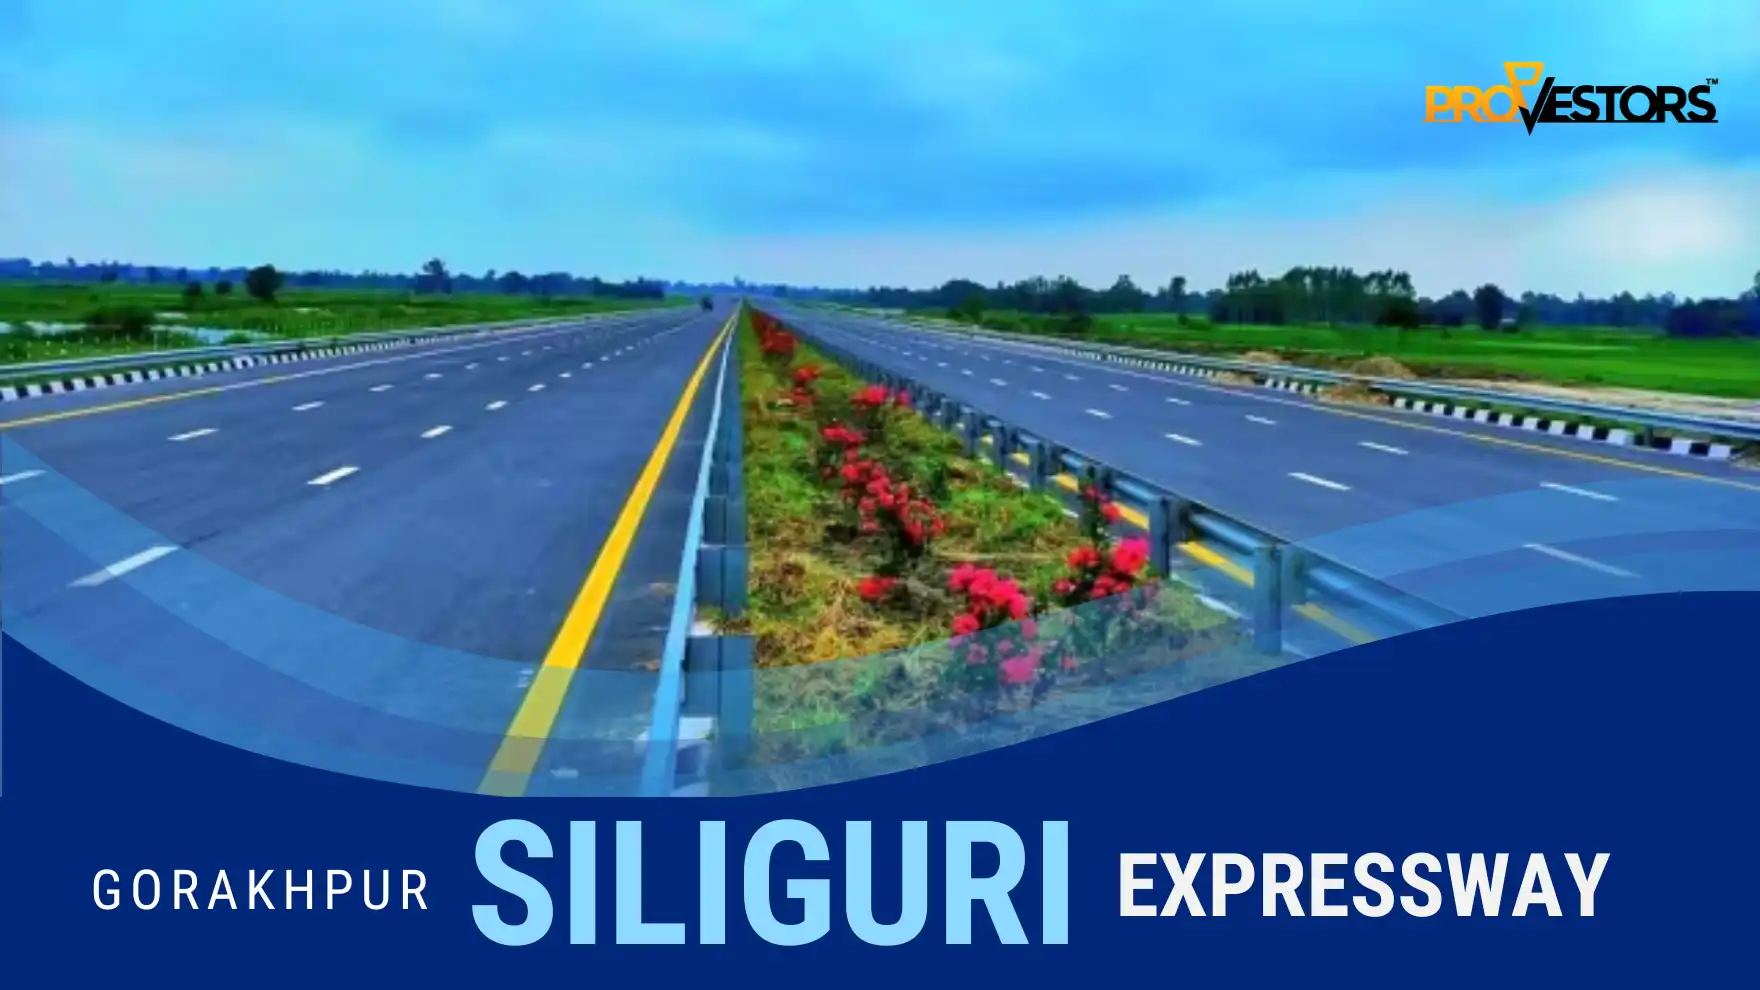 Gorakhpur Siliguri Expressway: Revolutionizing Connectivity in India